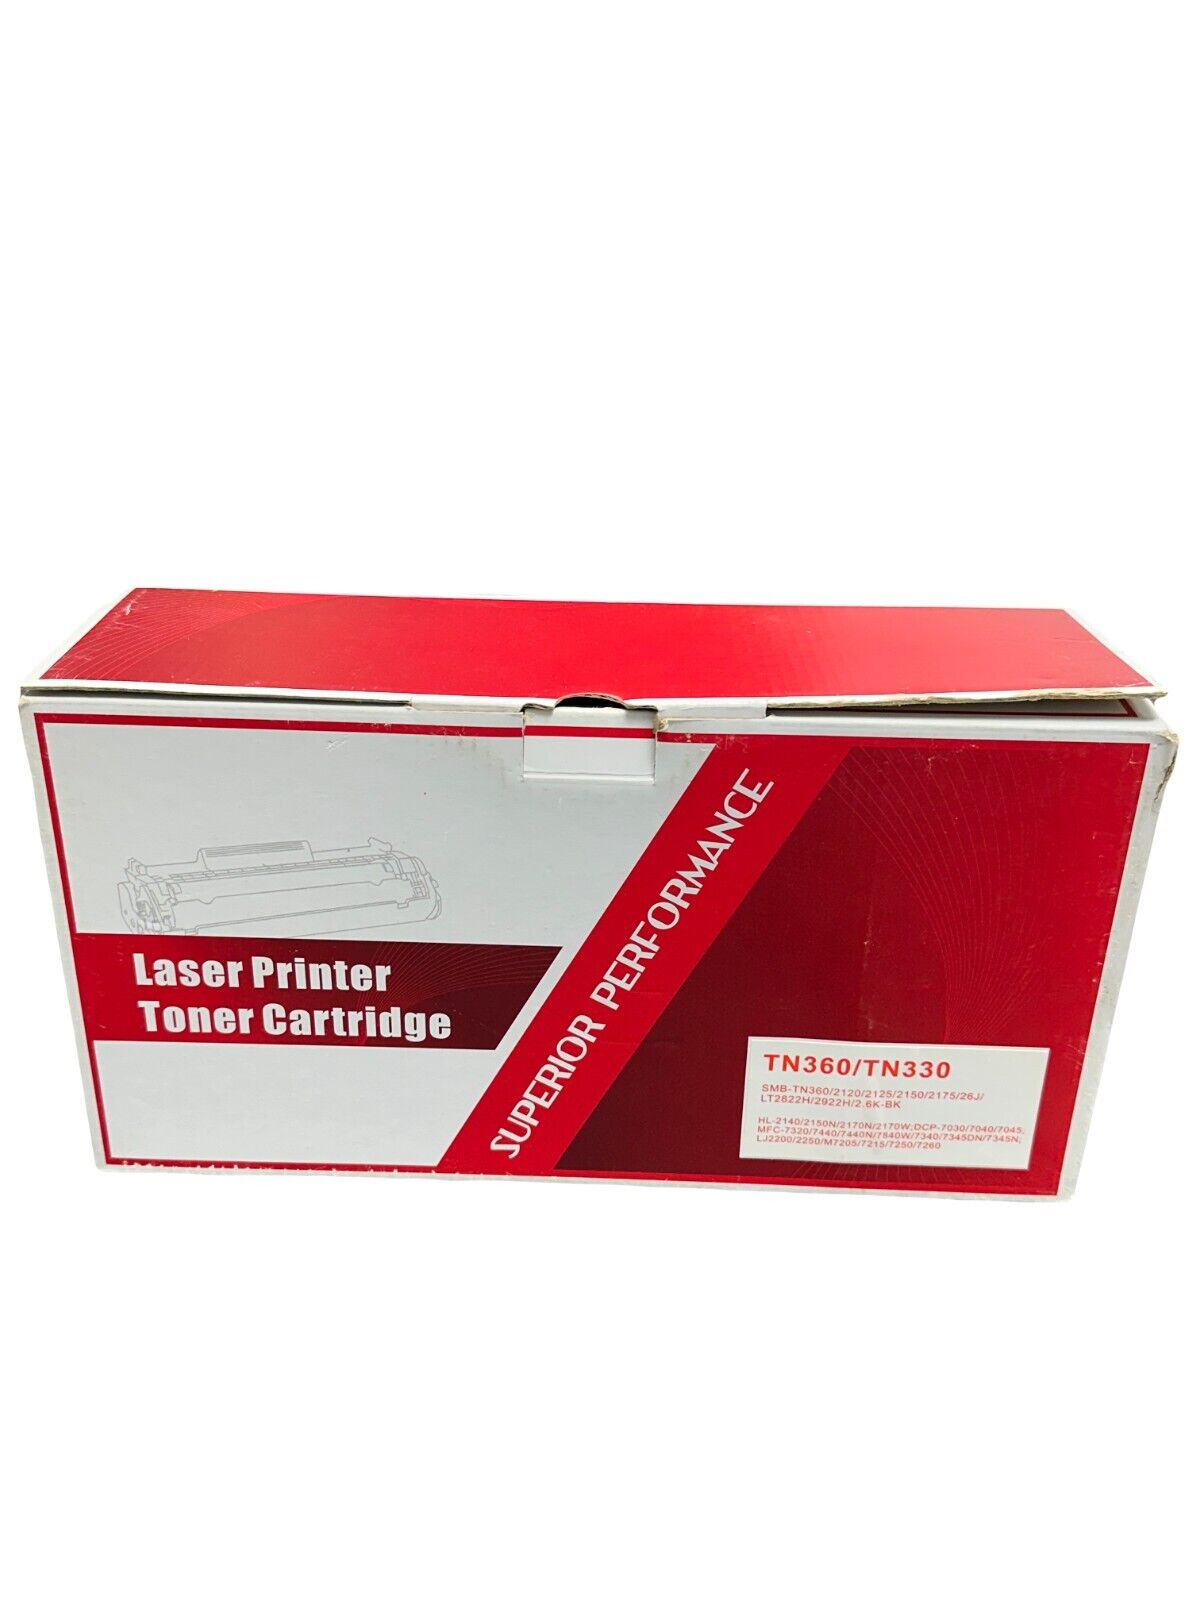 Superior Performance Laser Printer Toner Cartridge SMS-TN360 (Open Box)